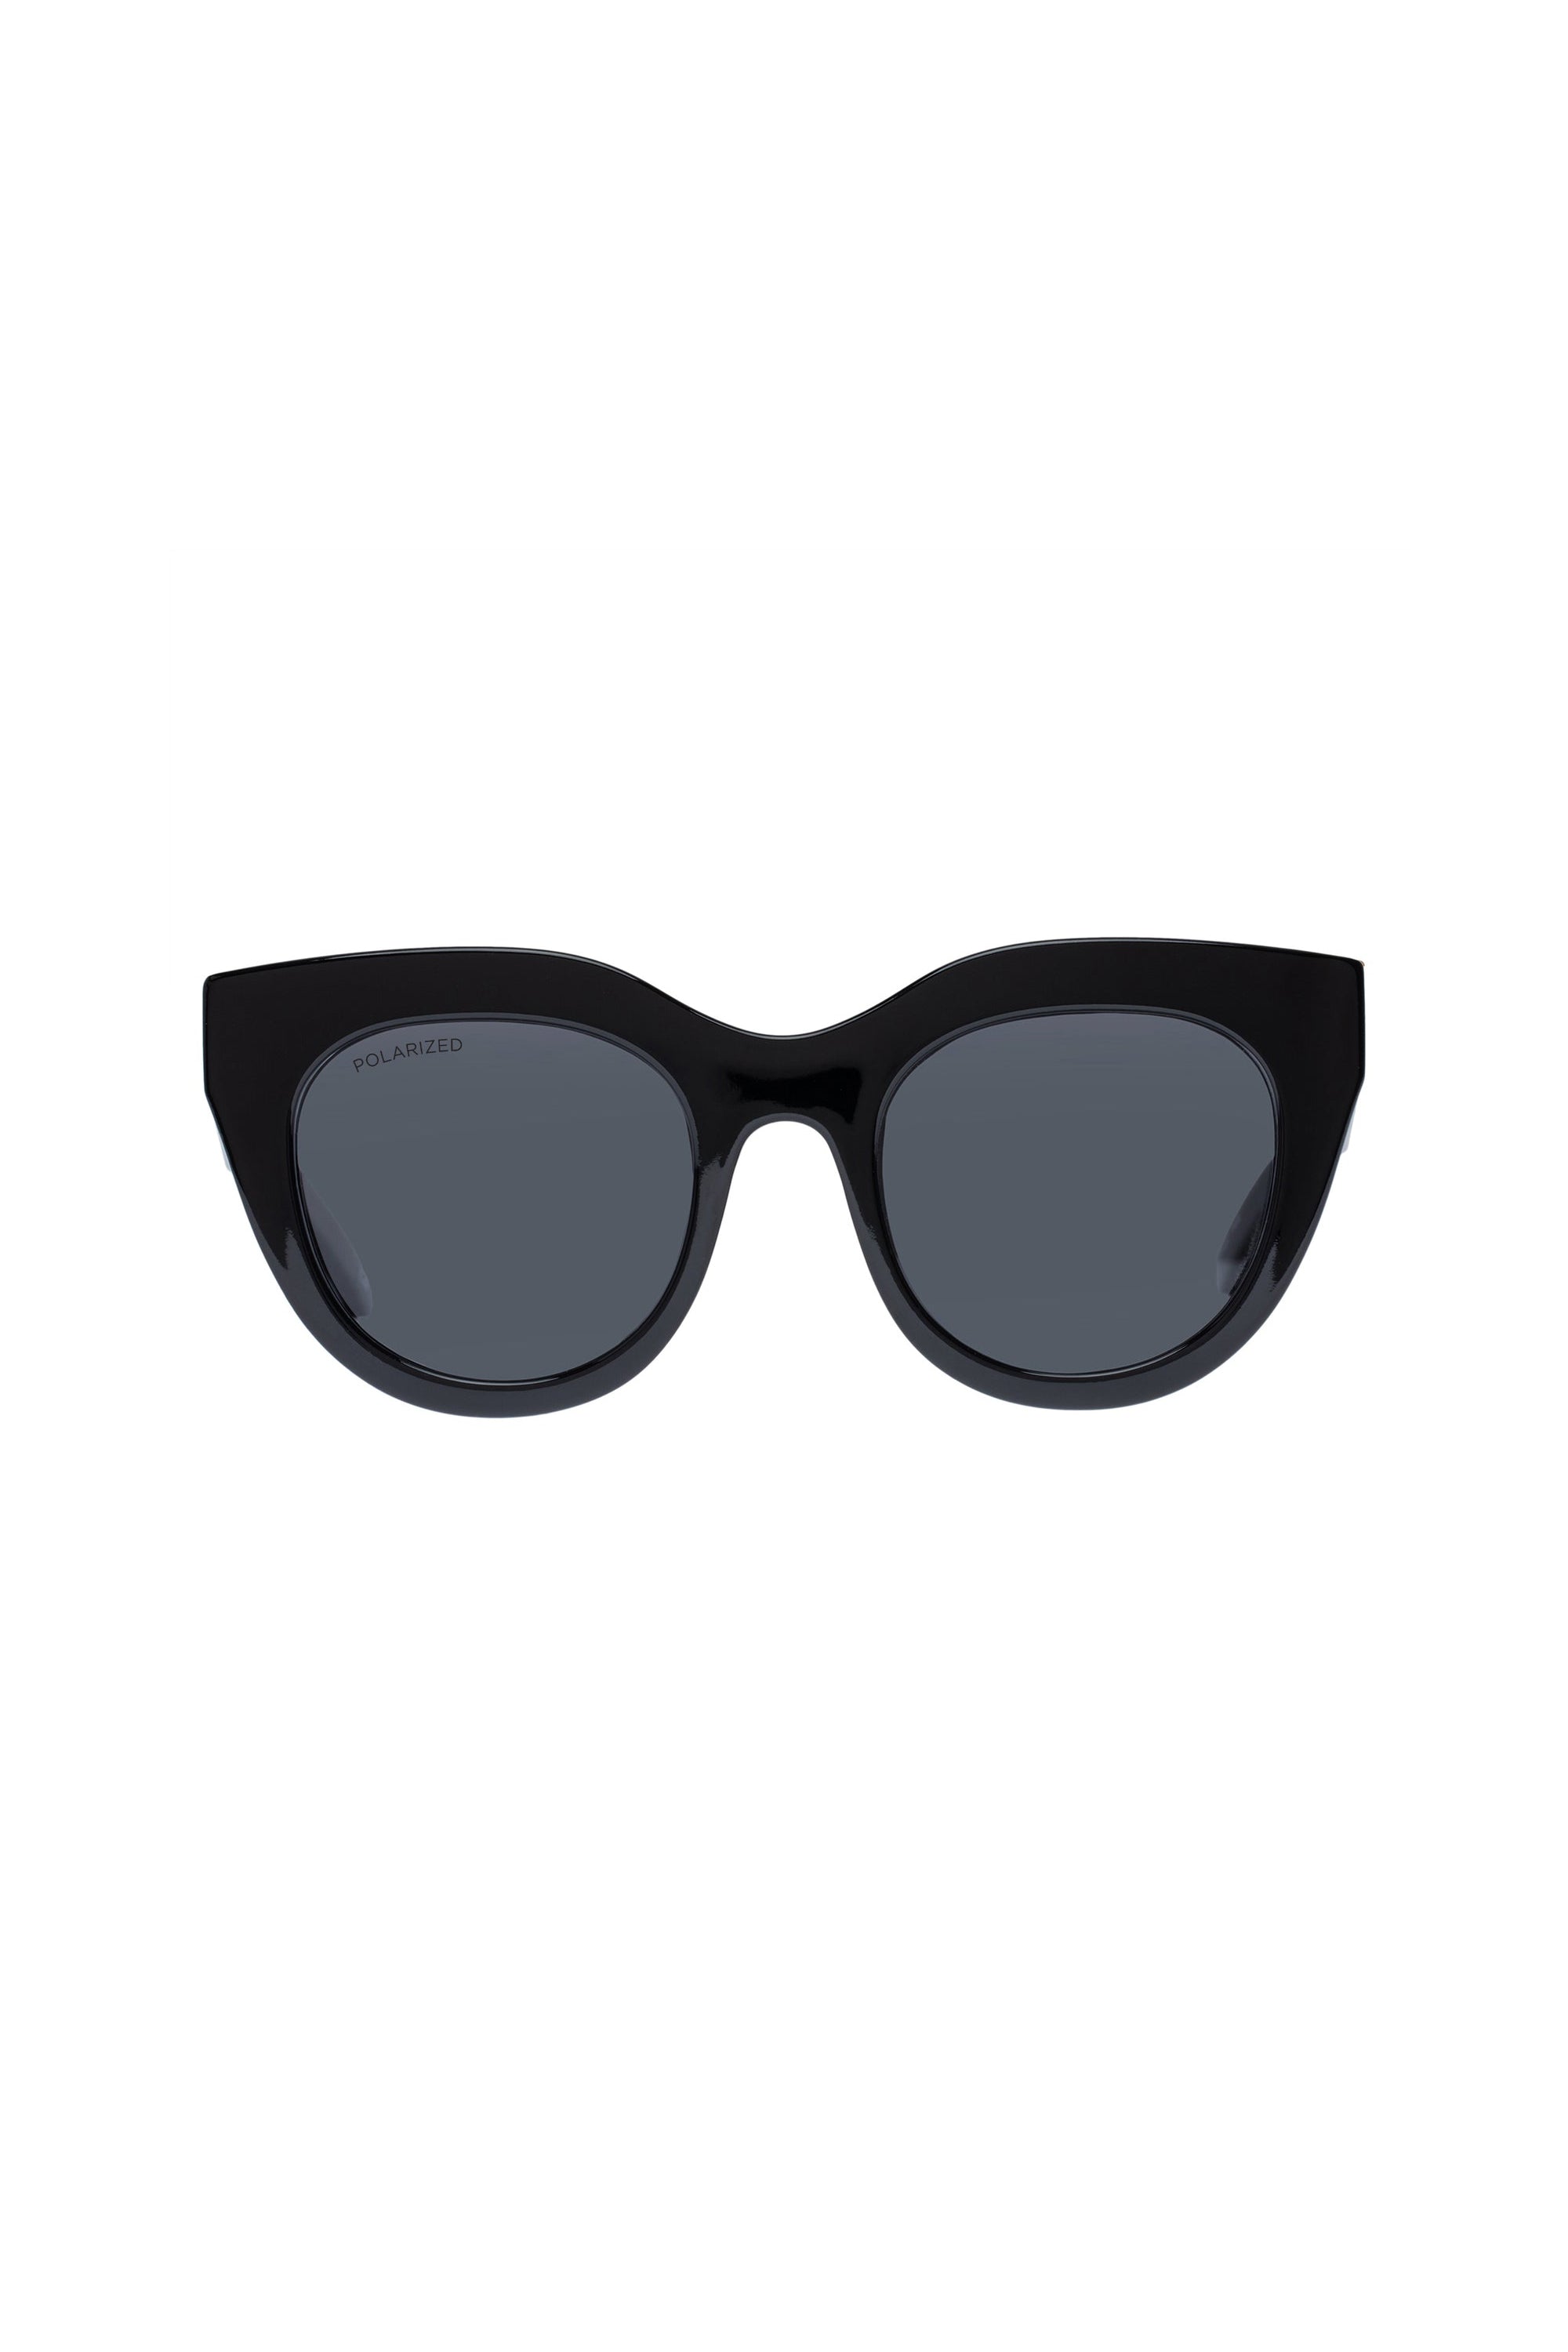 Air Heart Sunglasses - Black *Polarized*